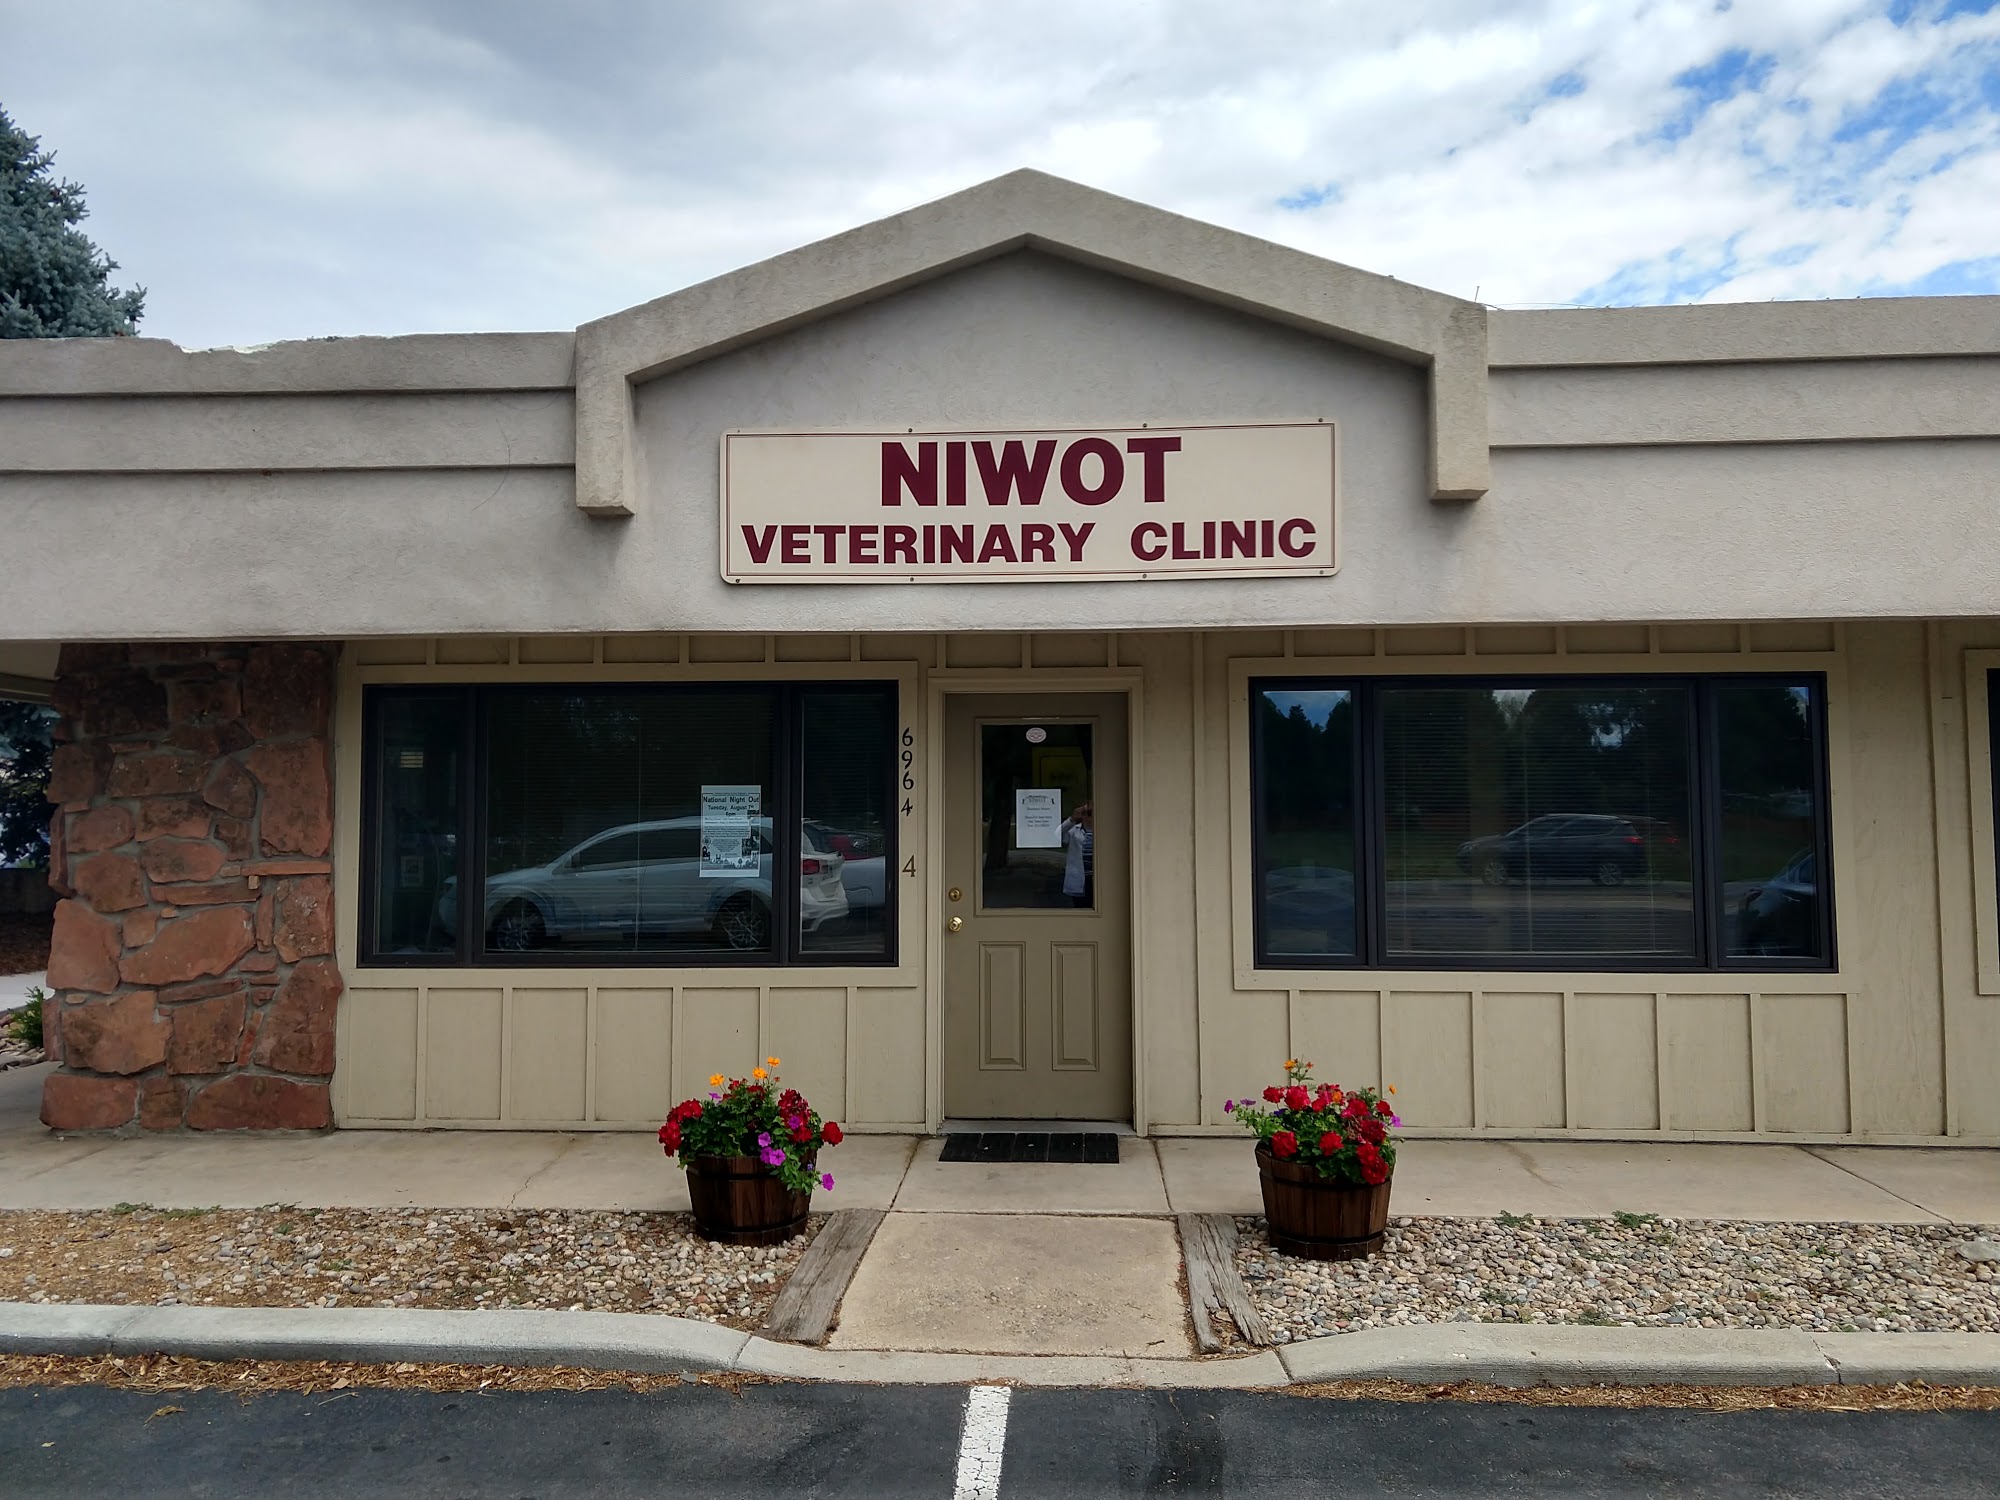 Niwot Veterinary Clinic